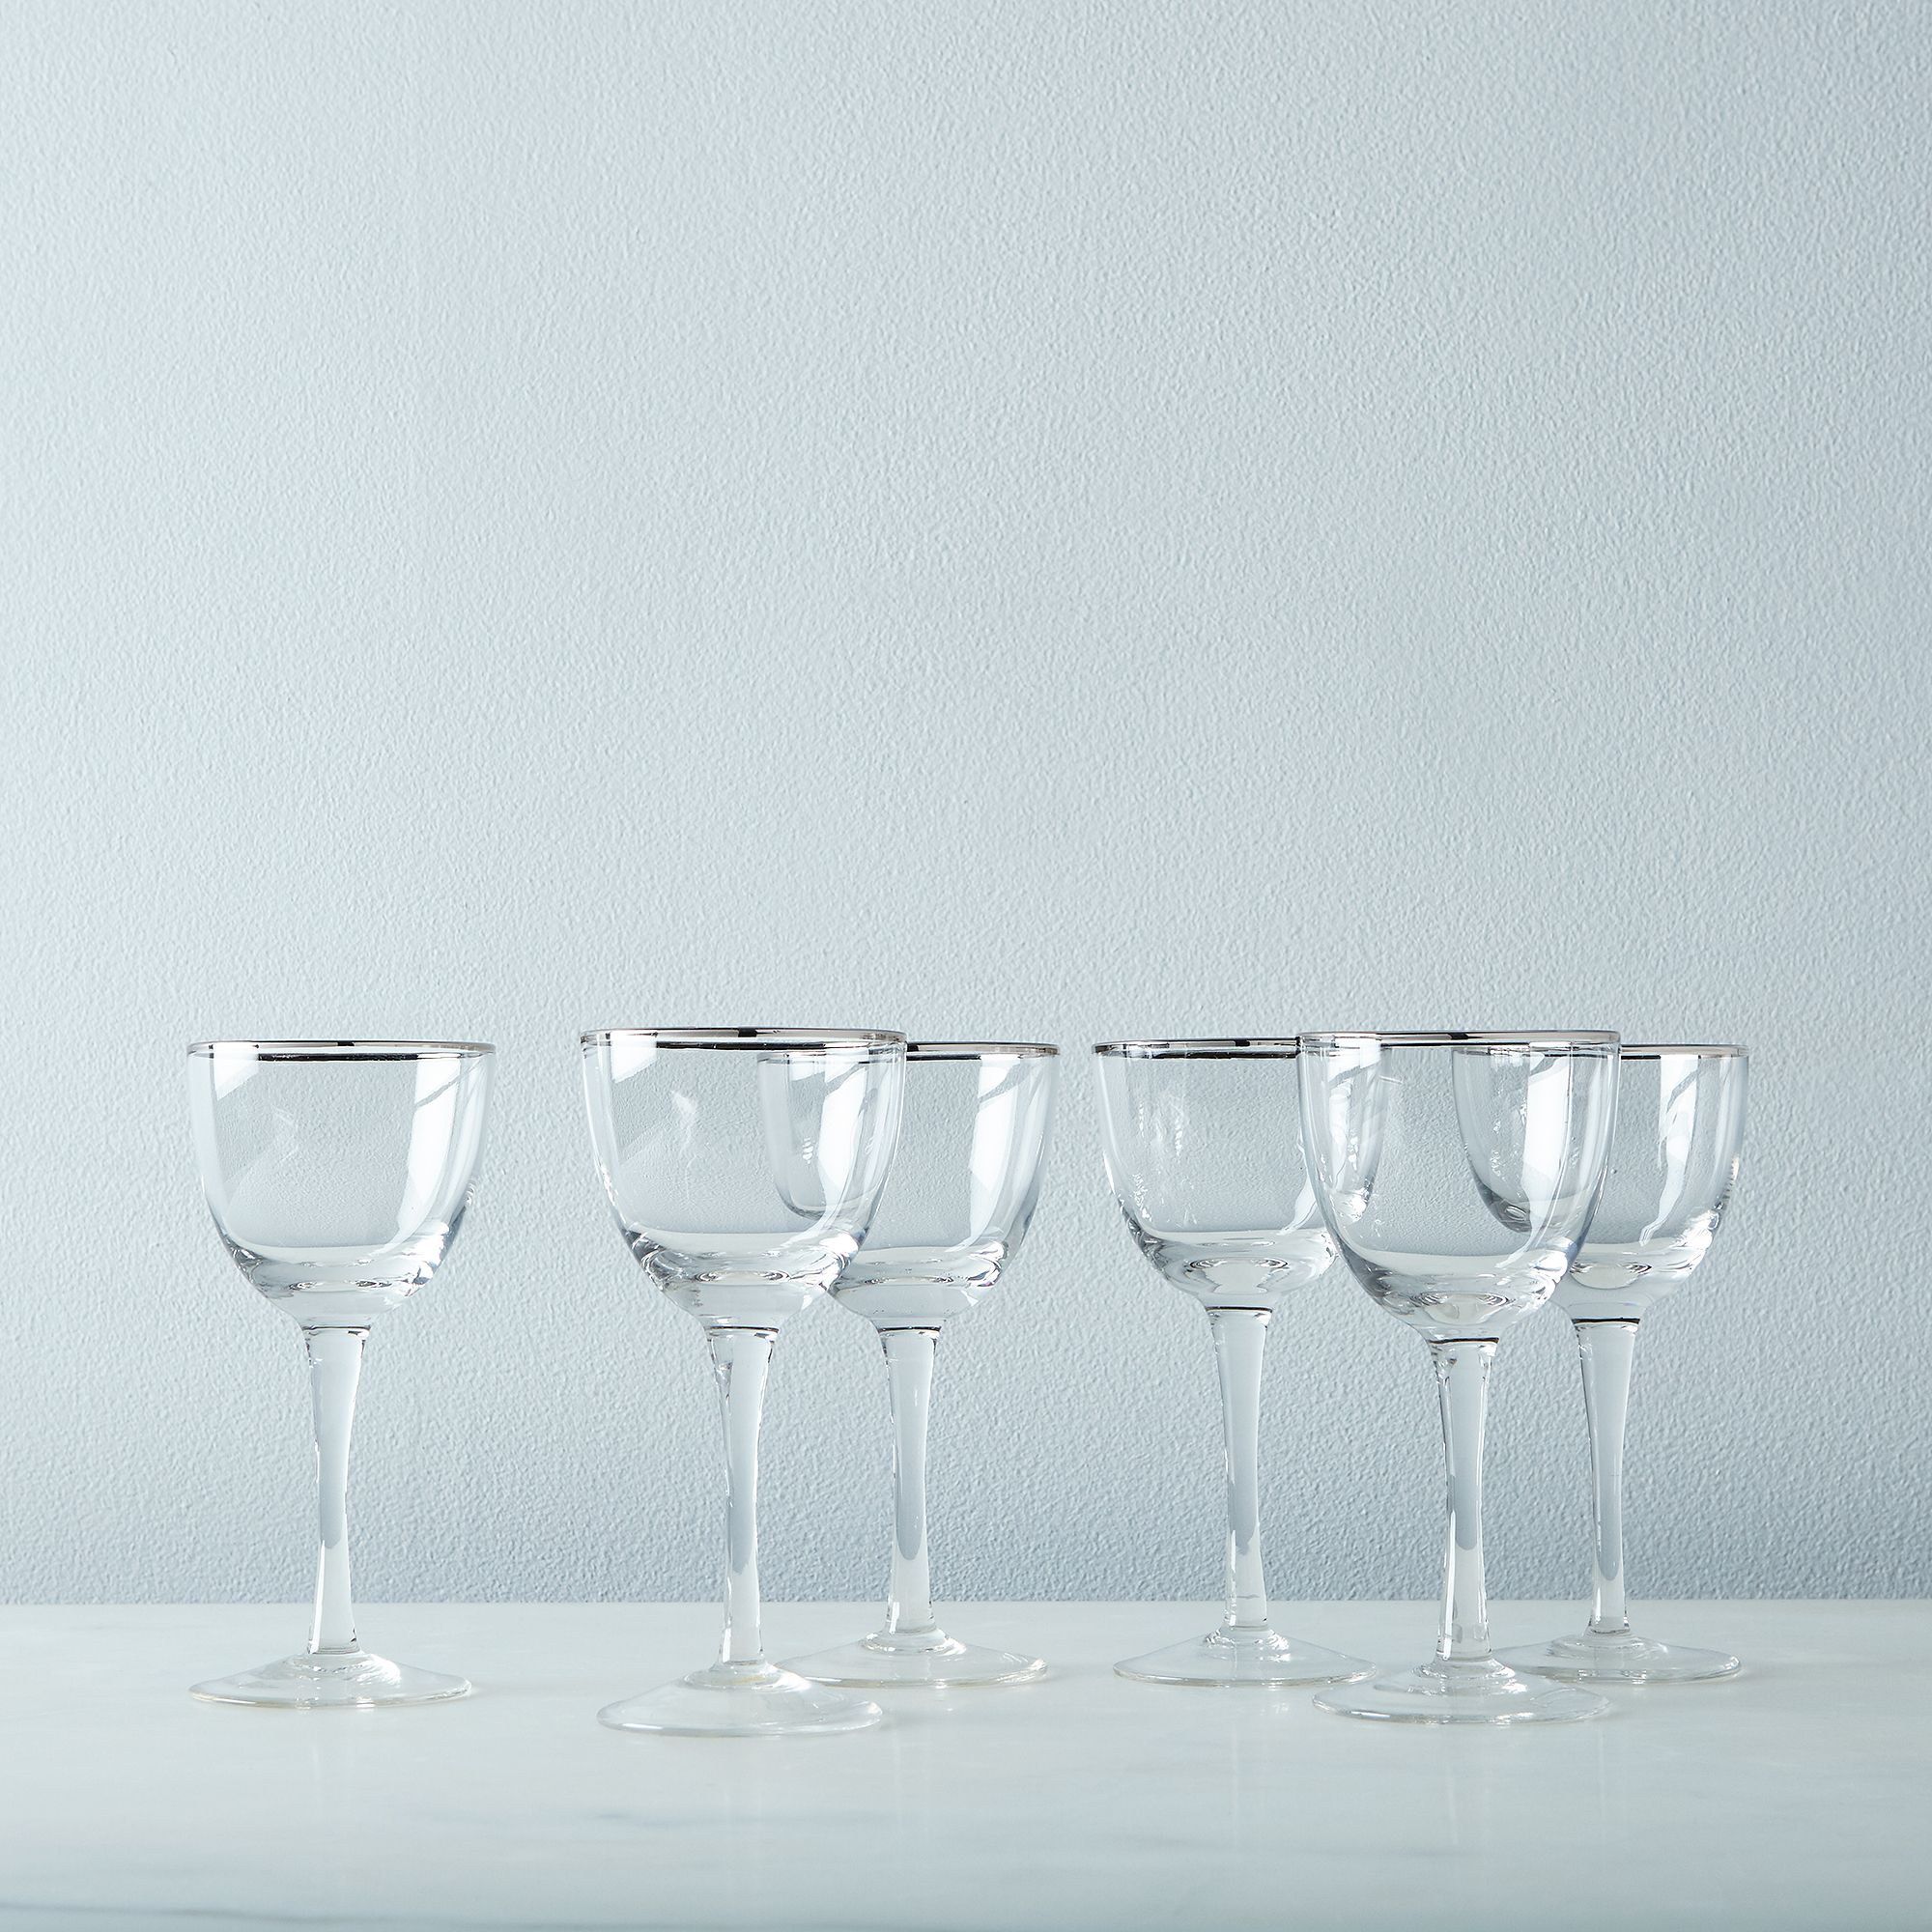 Metallic Rimmed Cocktail Glasses  - Silver Rim